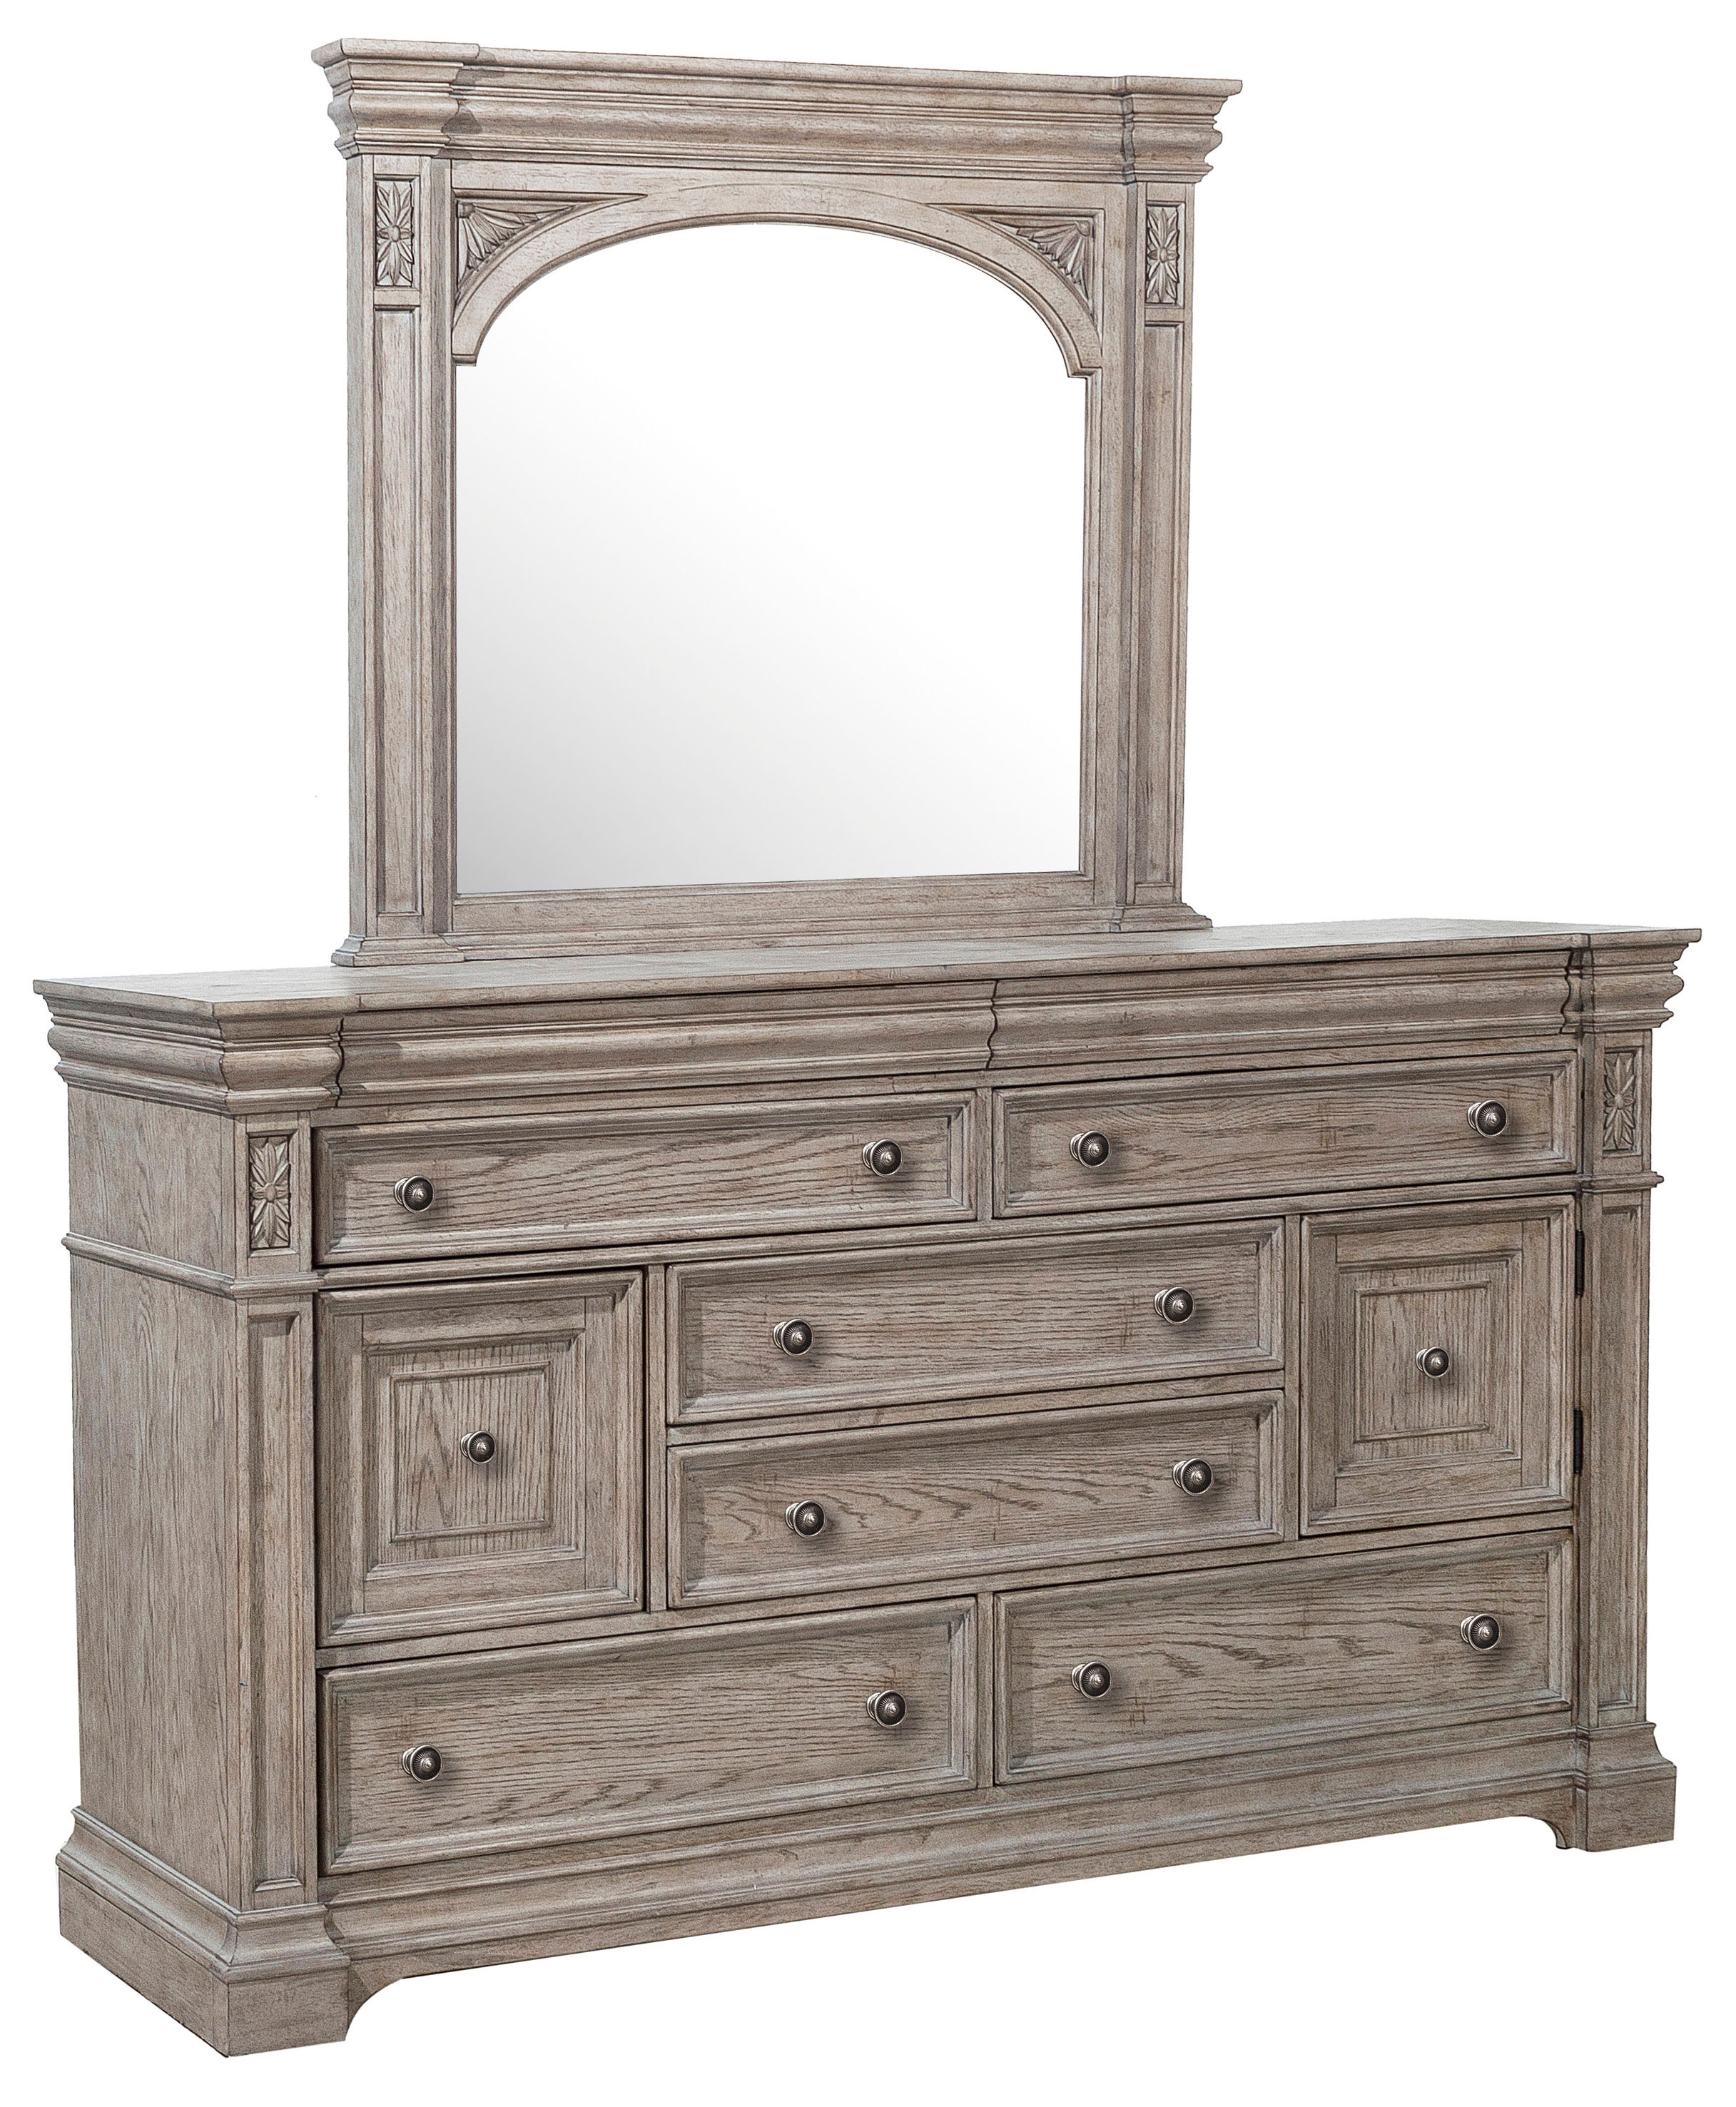 Pulaski Furniture Bedroom Kingsbury 8 Drawer Dresser P167100 